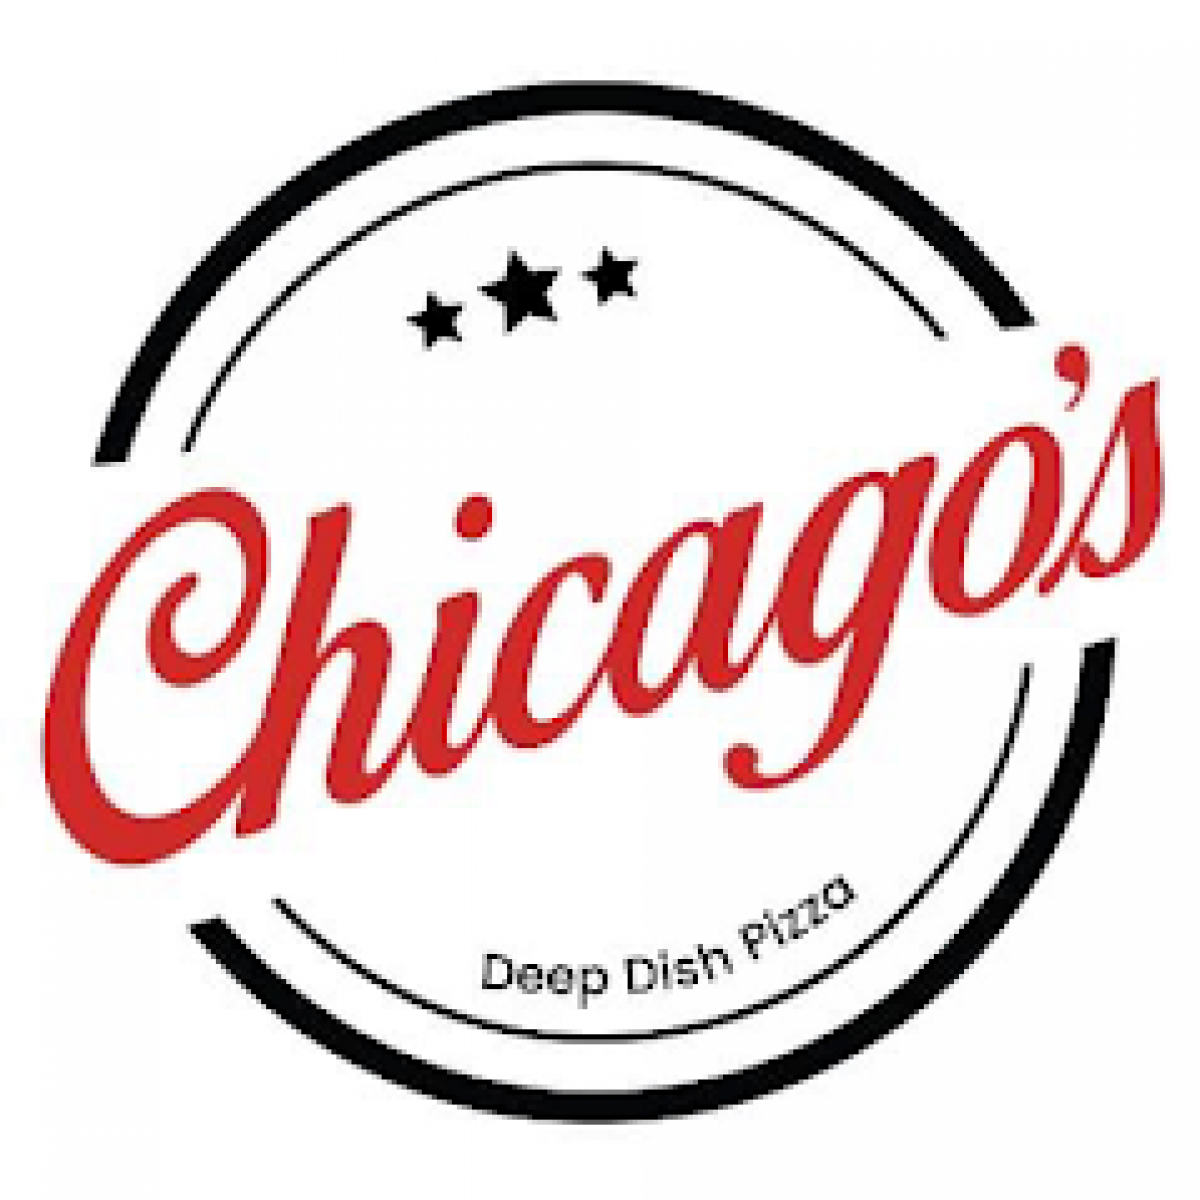 Chicago's Deep Dish Pizza